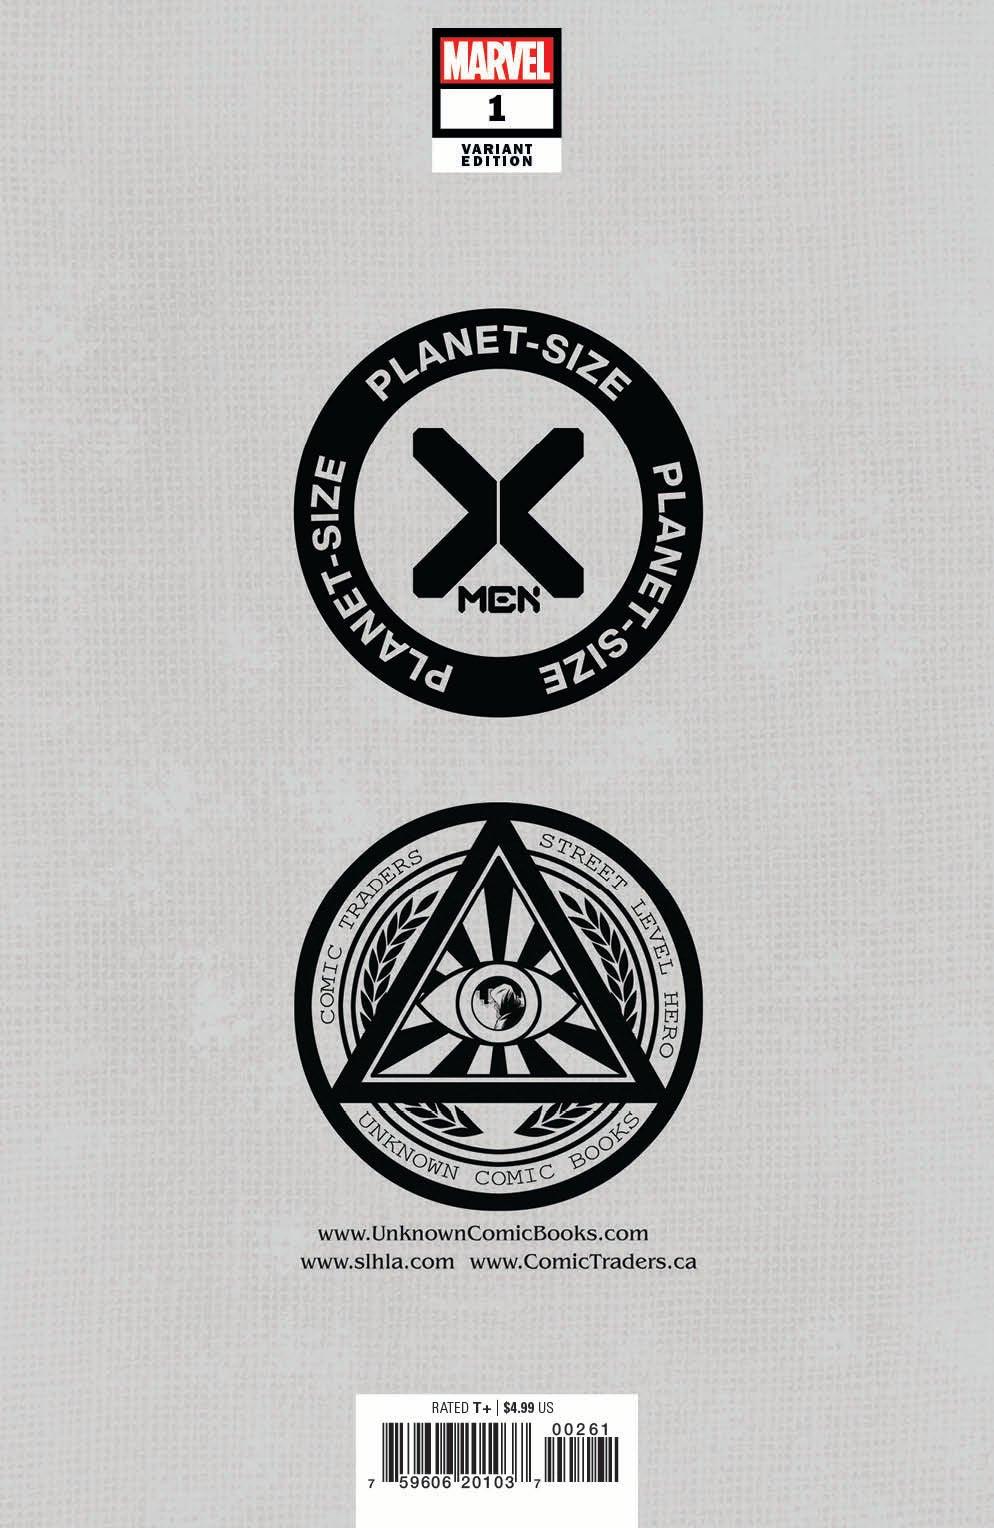 PLANET-SIZED X-MEN #1 UNKNOWN COMICS DAVID NAKAYAMA EXCLUSIVE VAR GALA (06/16/2021) - FURYCOMIX